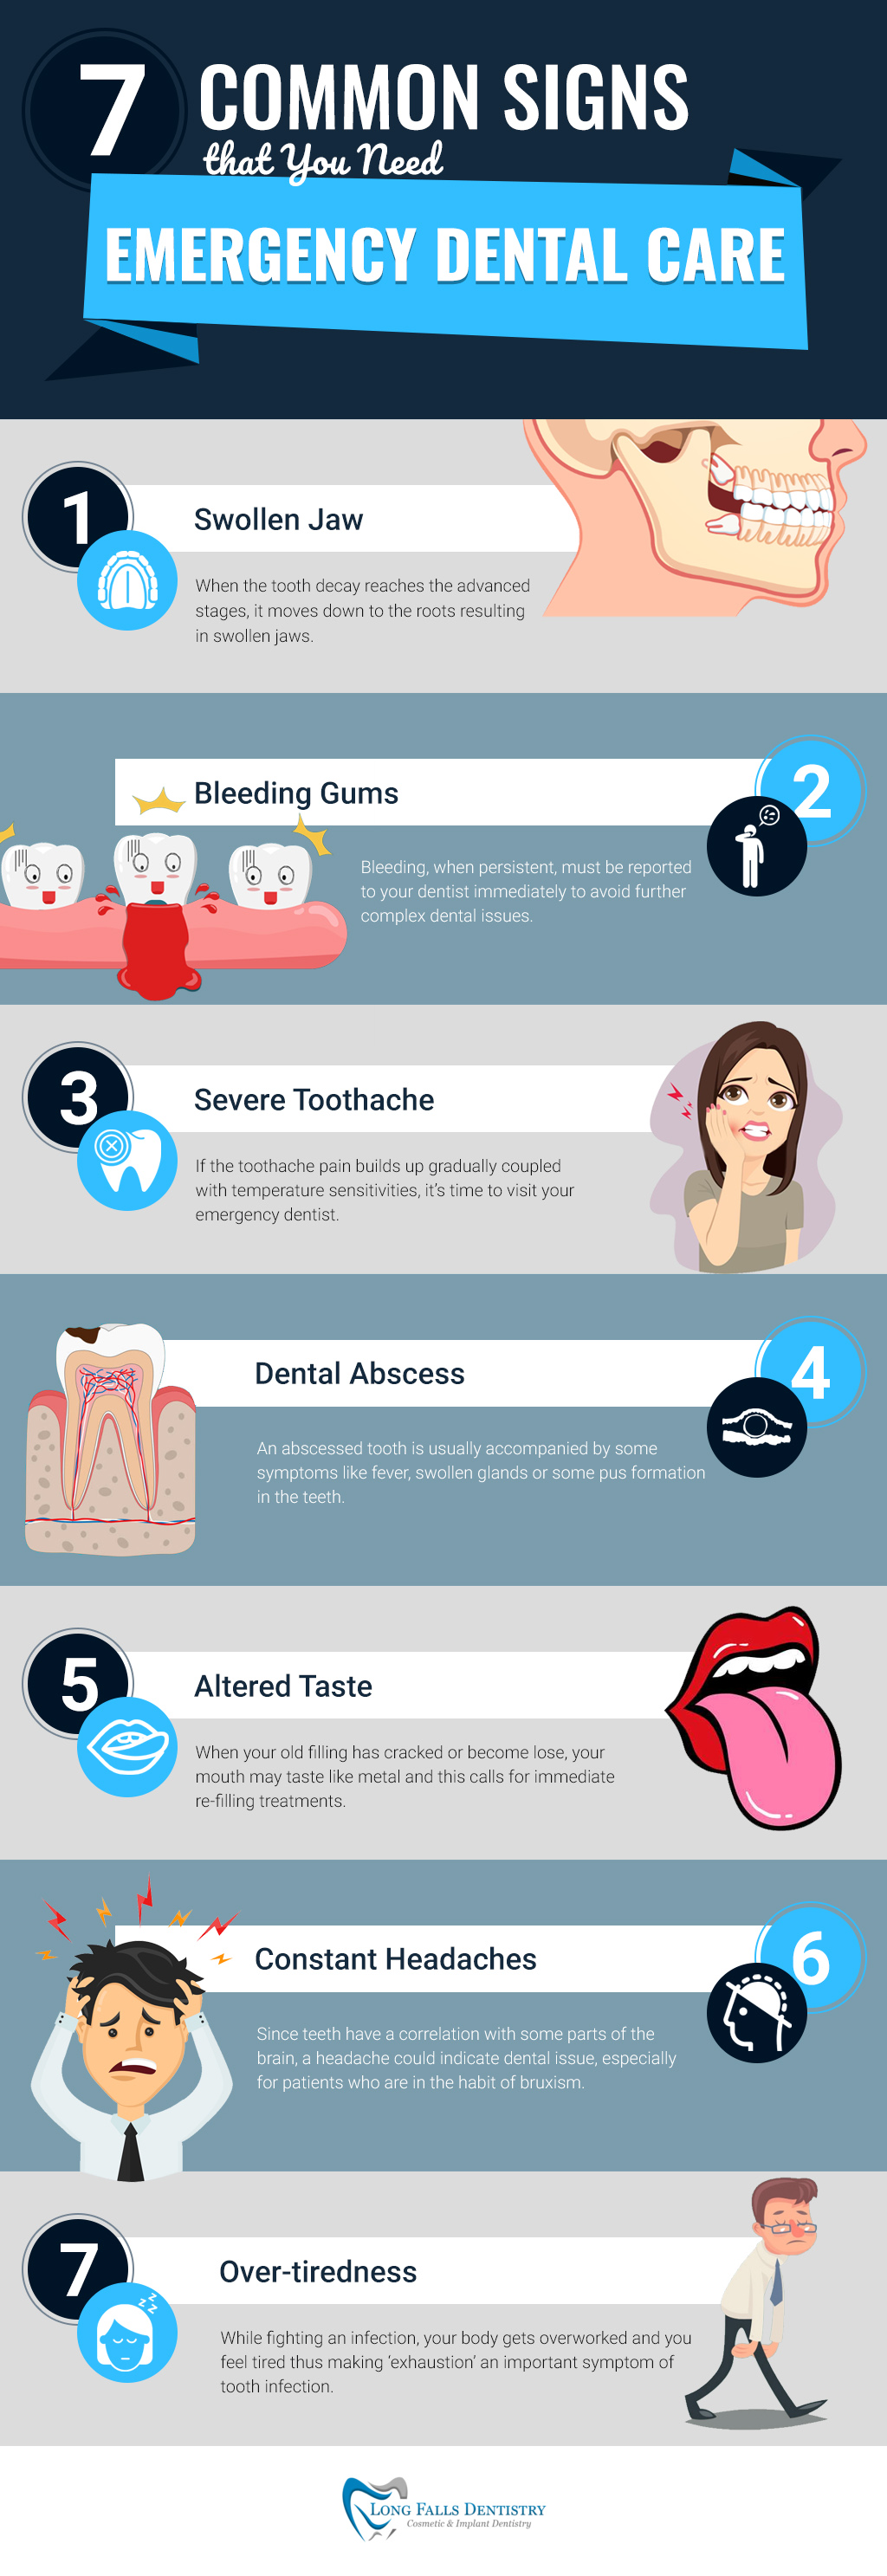 emergency dental care signs